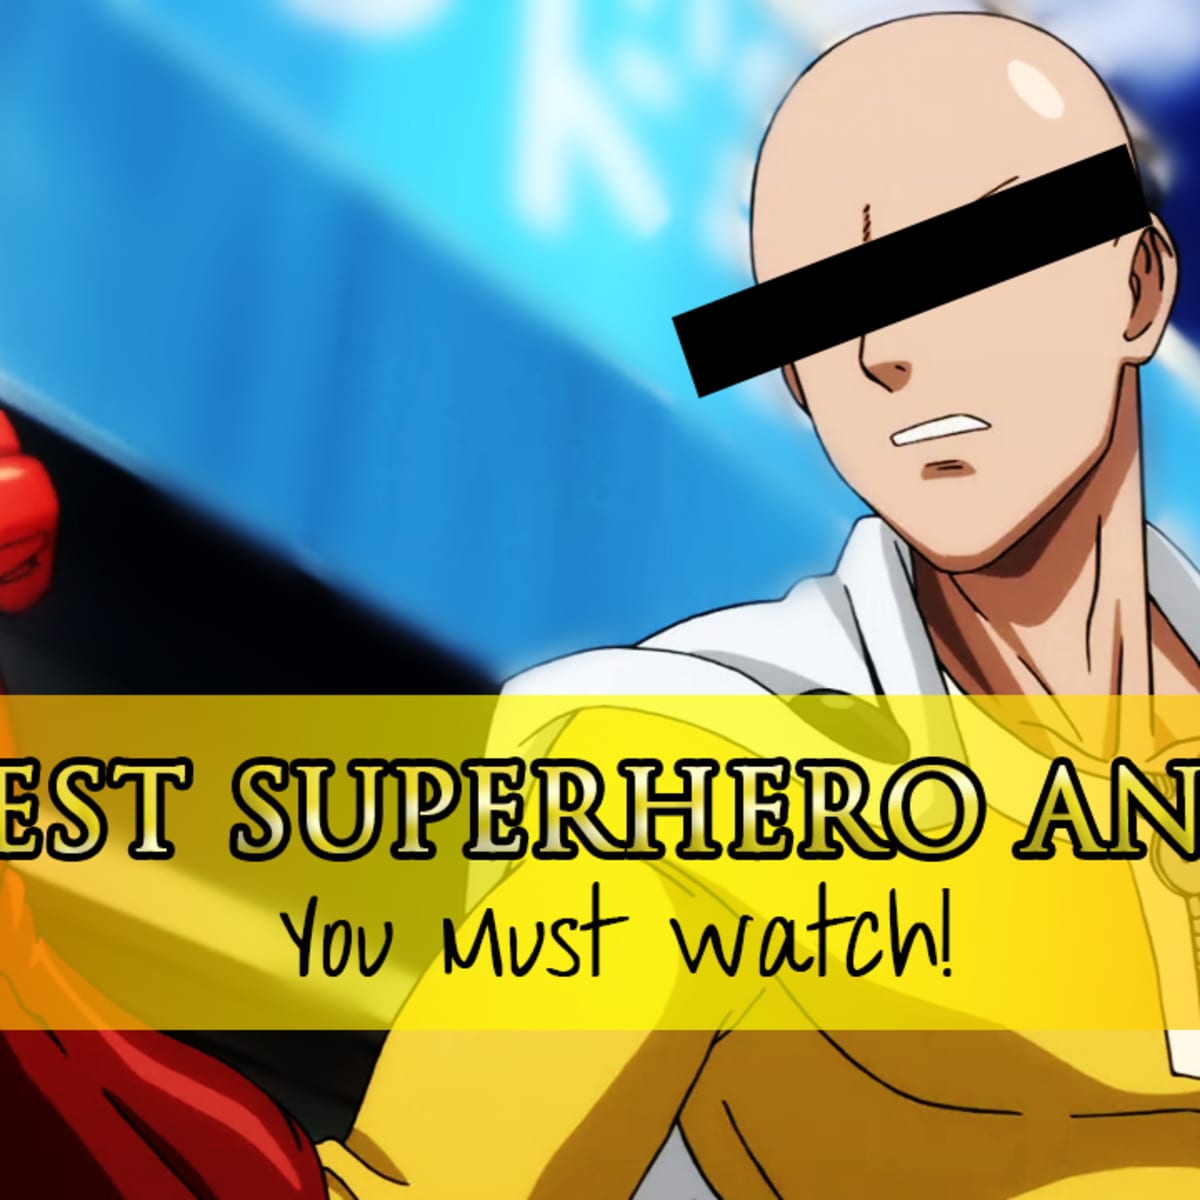 10 Best Superhero Anime - ReelRundown